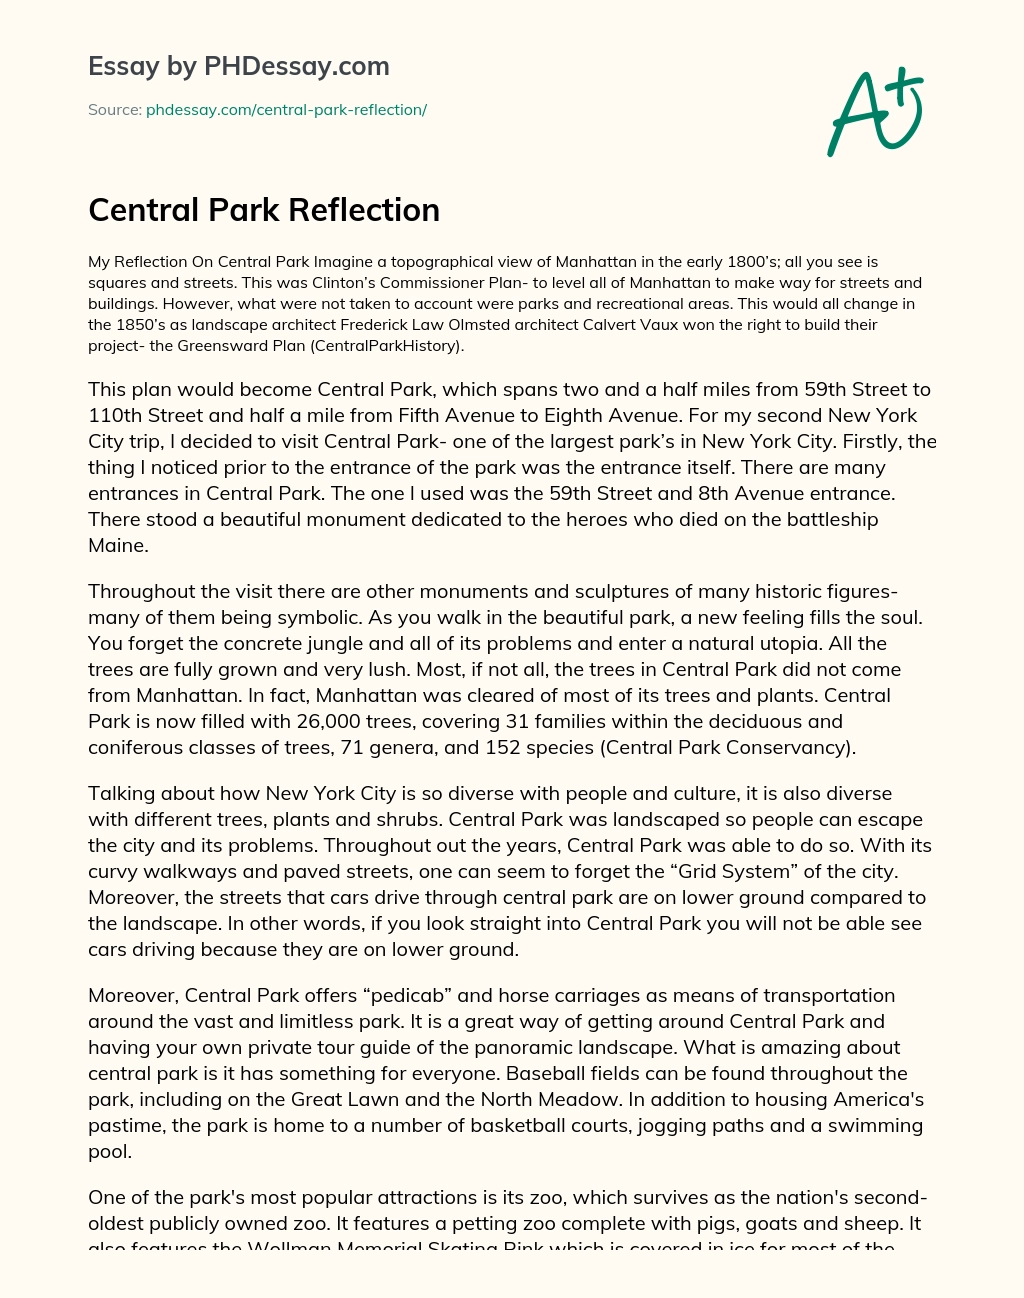 Central Park Reflection essay